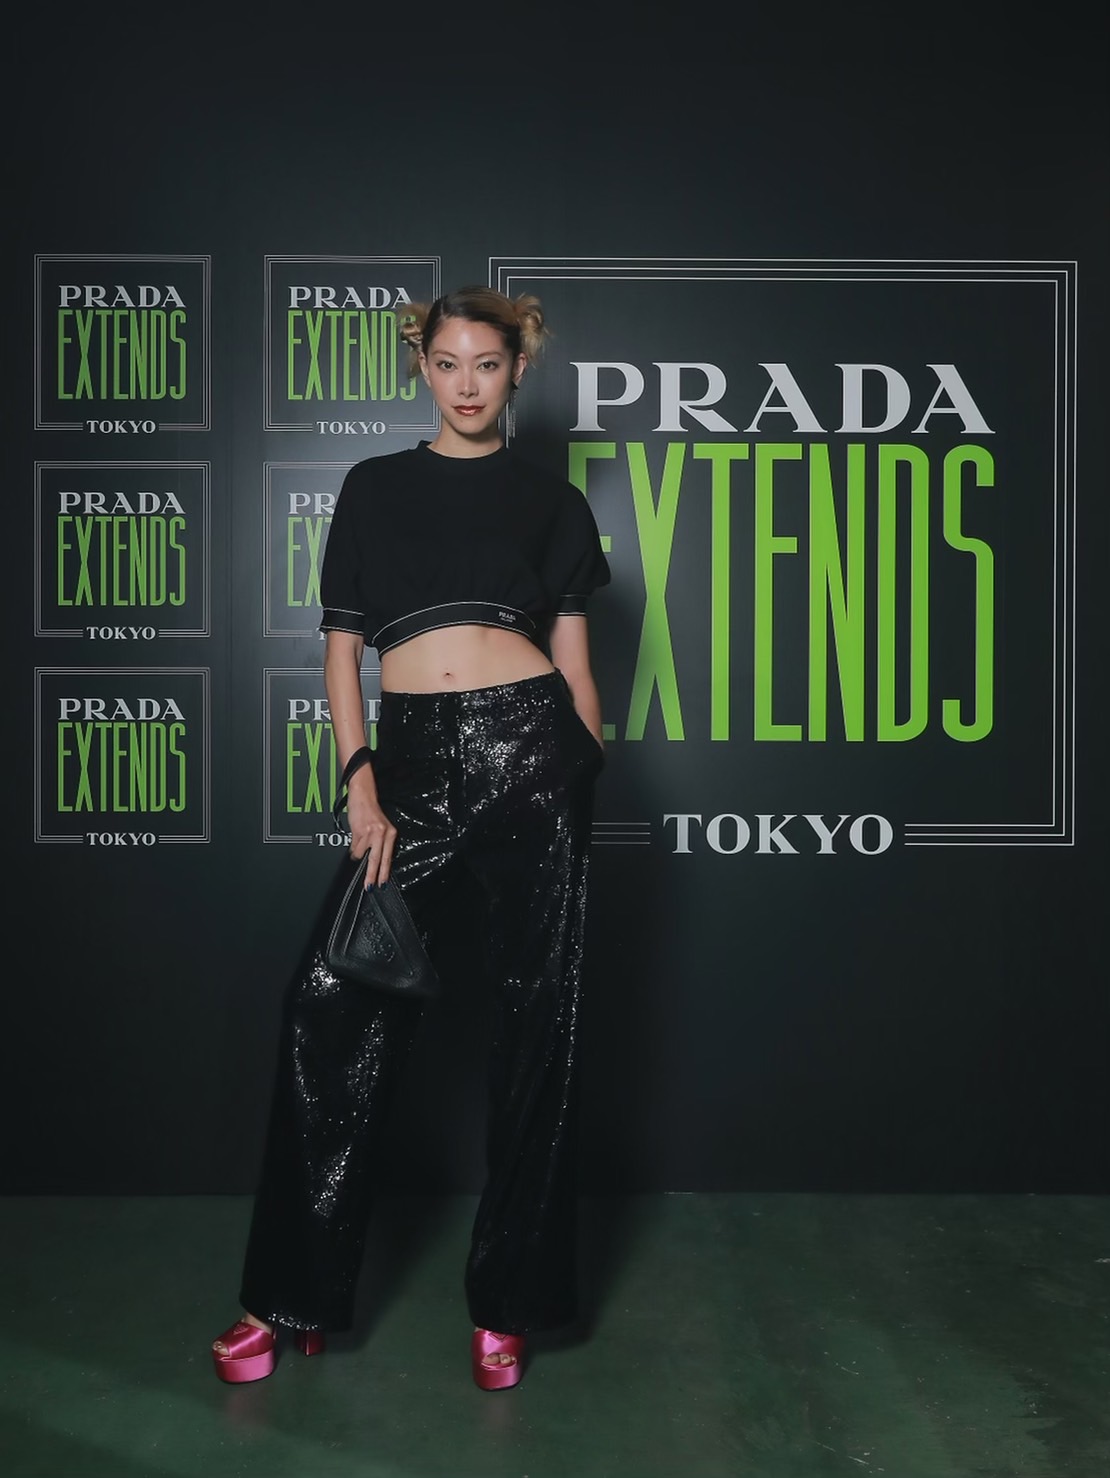 Prada EXTENDS event in tokyo | NEWS | Image Models 株式会社ボン イマージュ